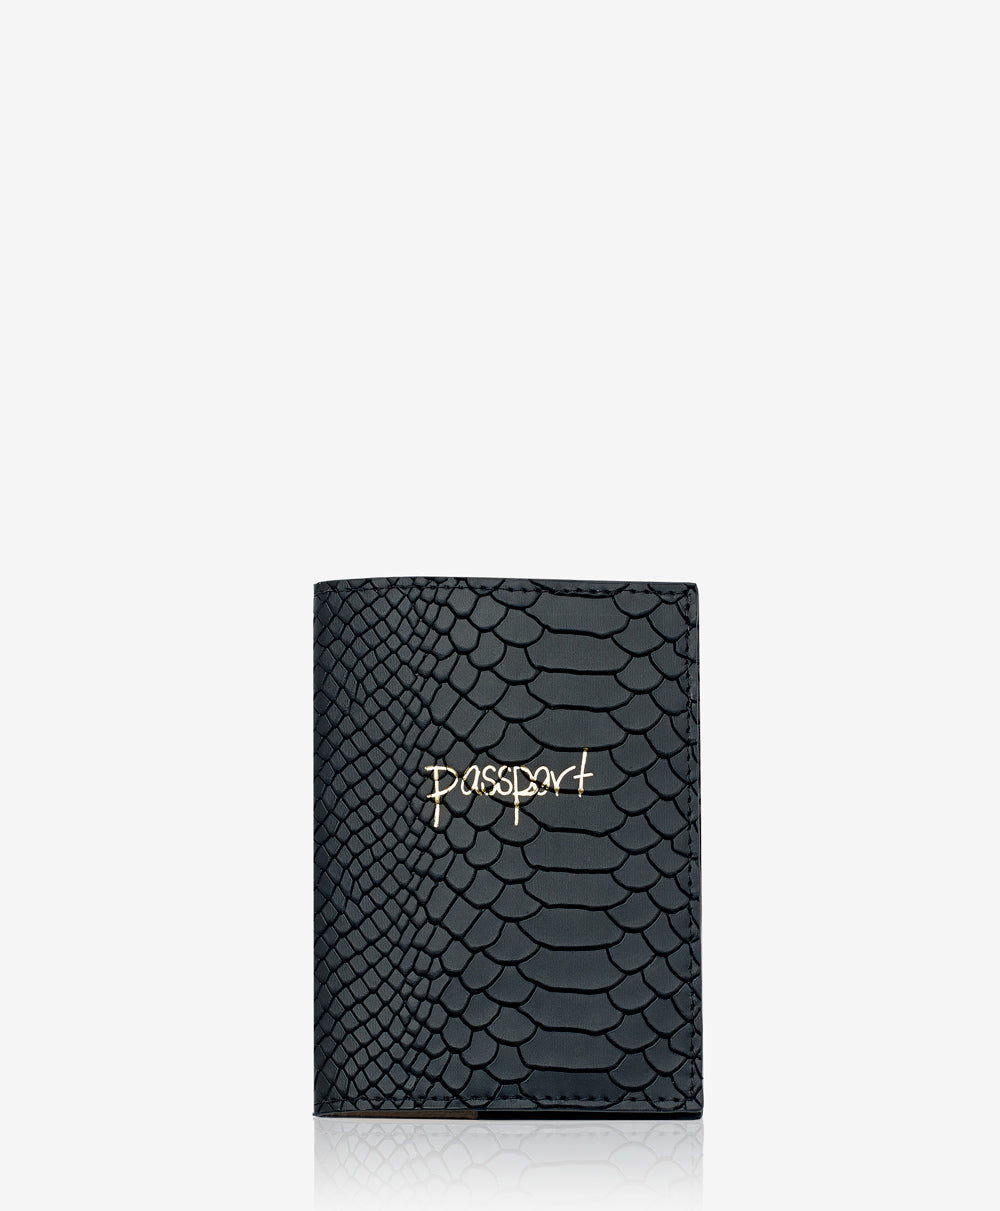 GiGi New York Passport Case Black Embossed Python Leather